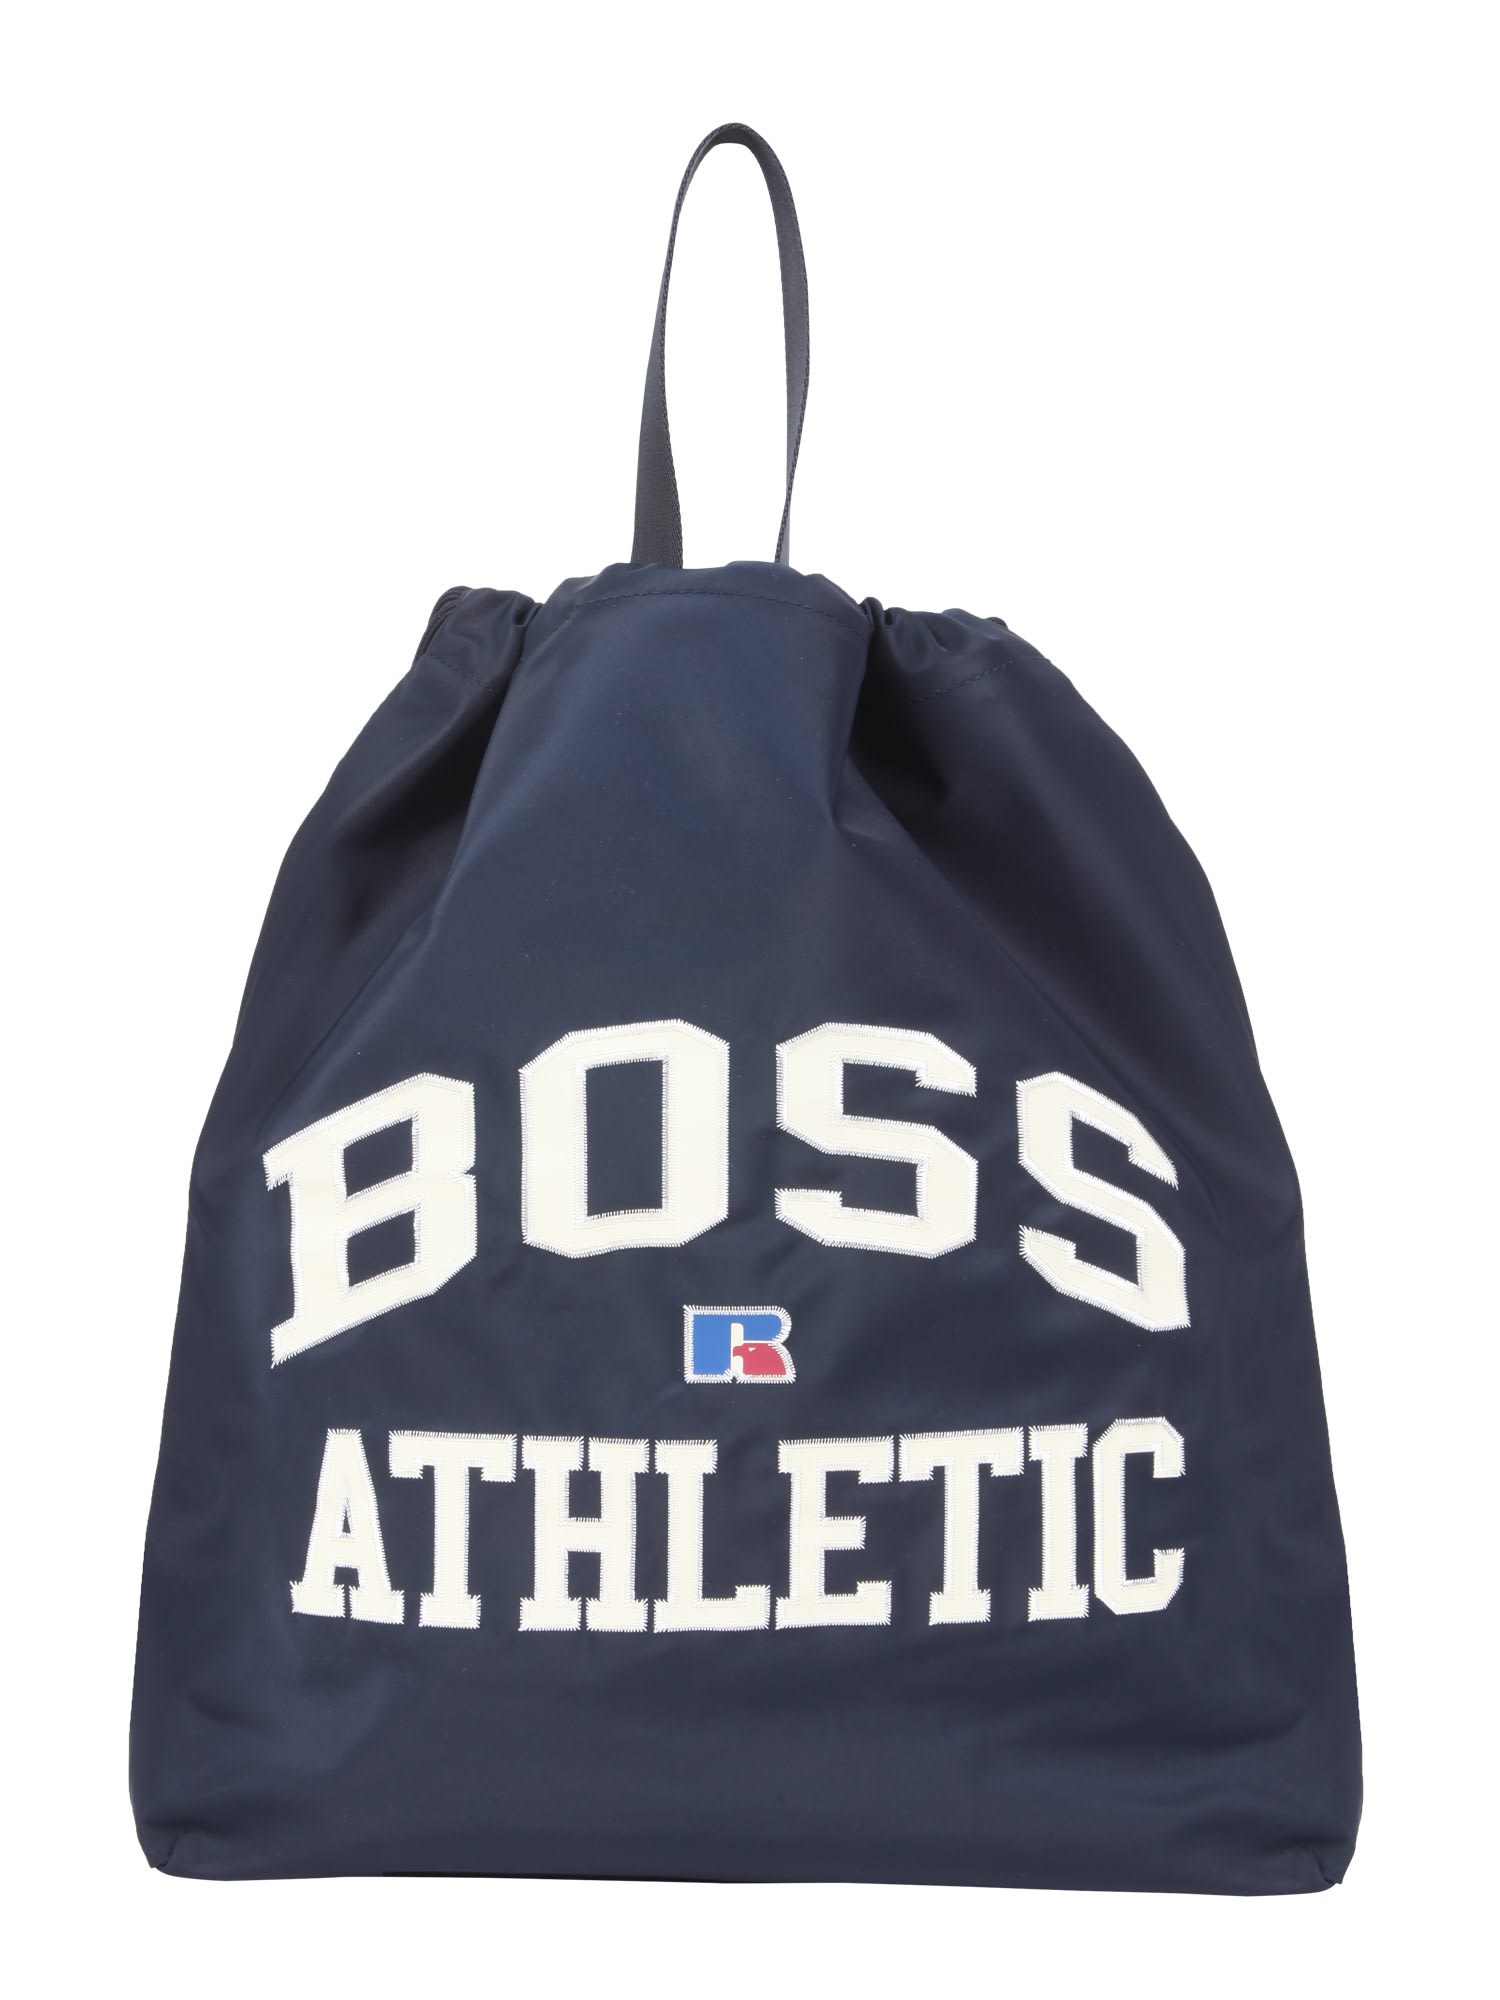 Hugo Boss Bag With Drawstring